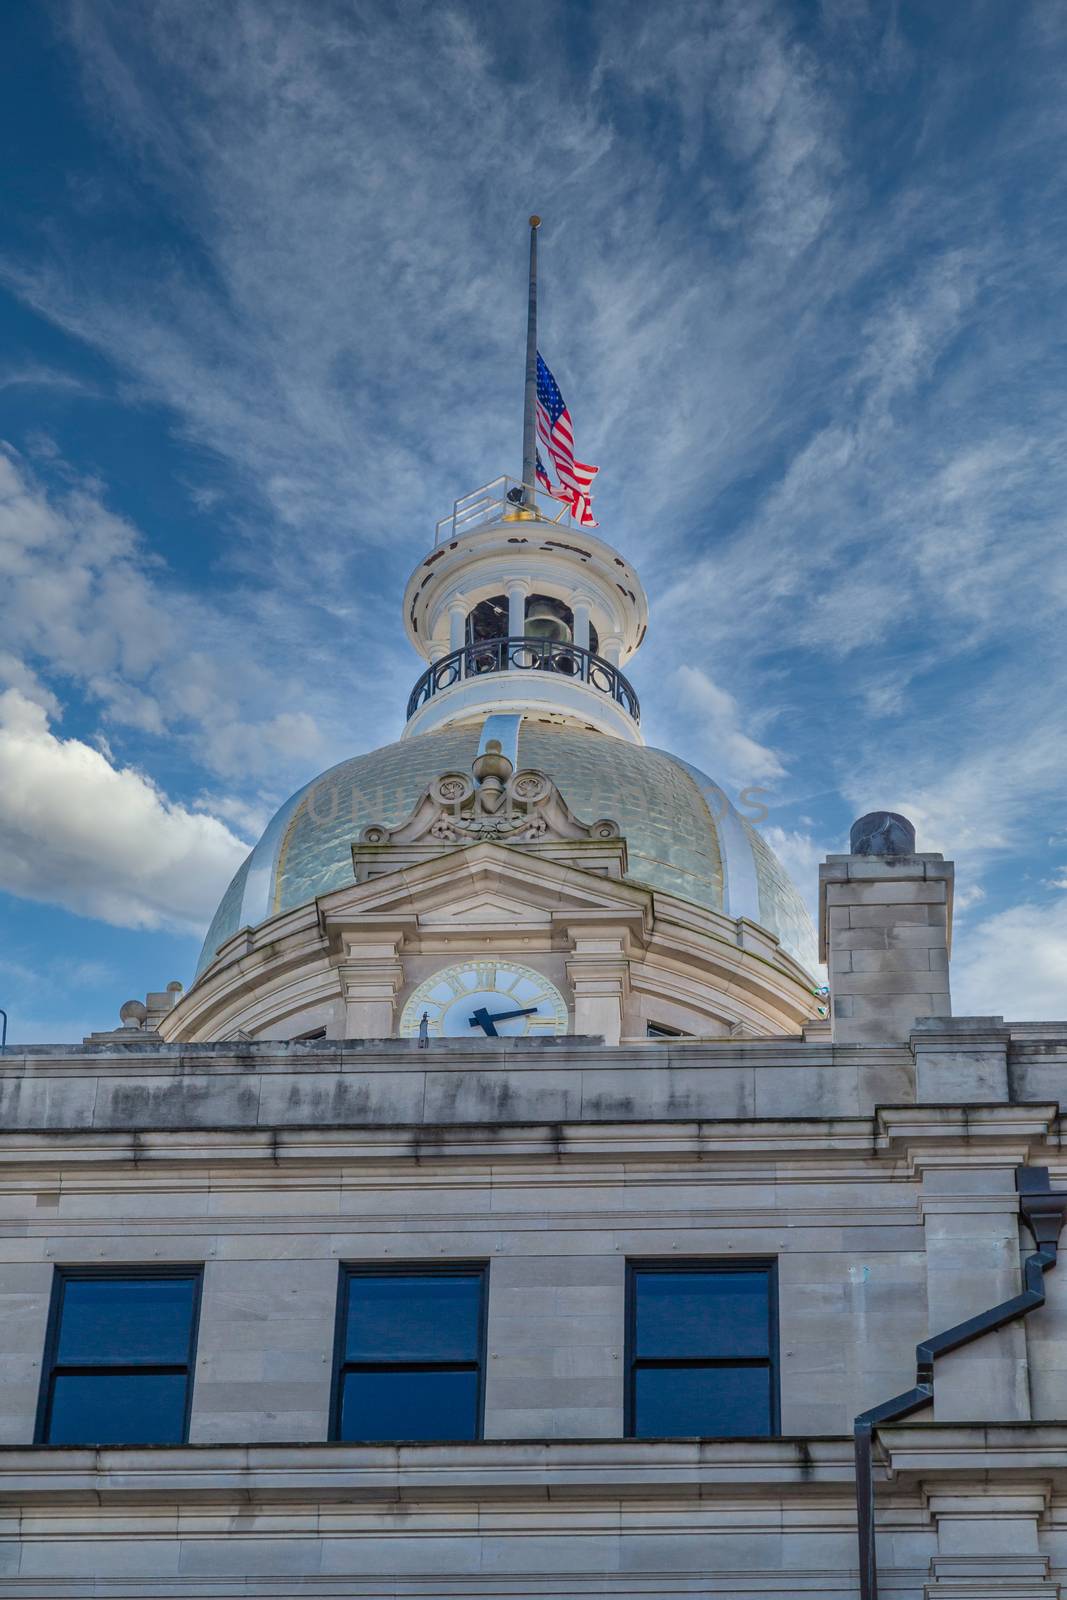 Dome clock and flag on Old Savannah City Hall